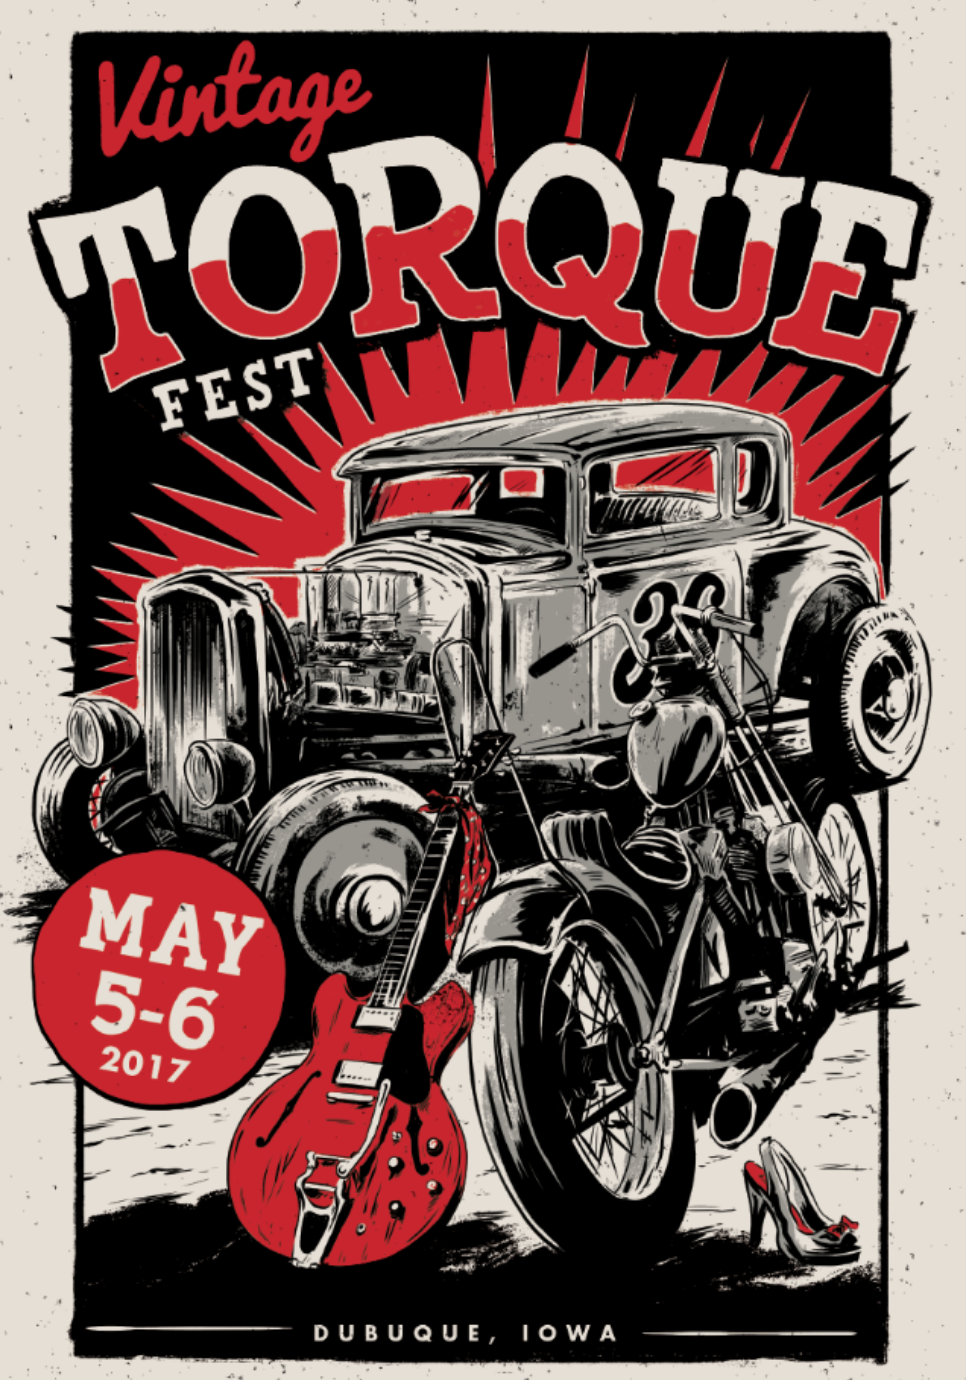 vintage torque fest 2017 flyer